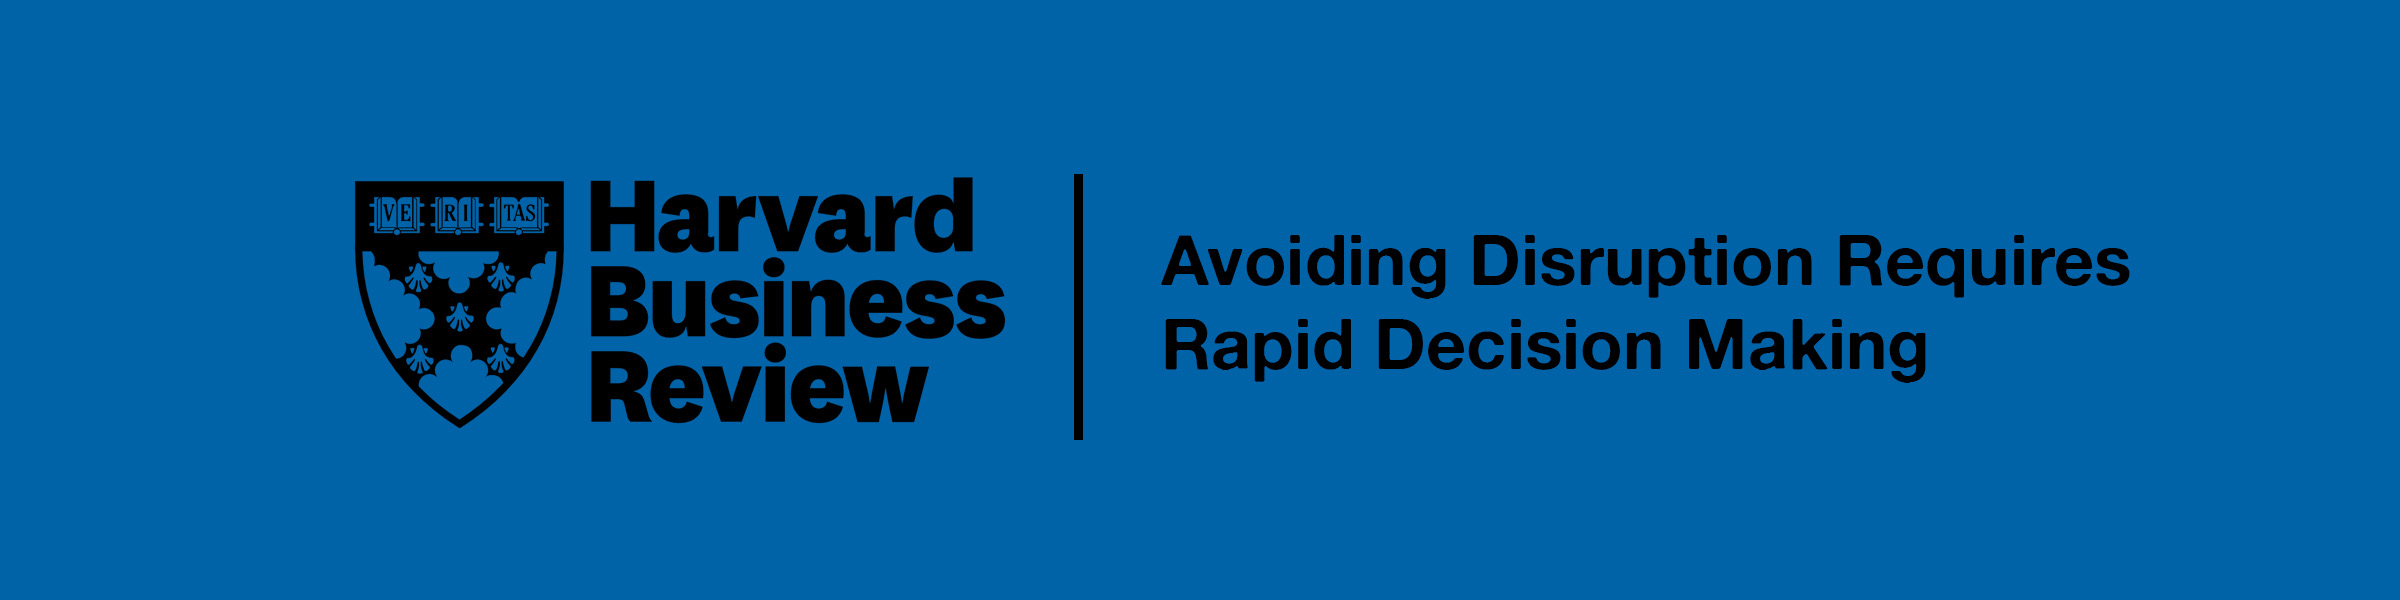 Avoiding Disruption Requires Rapid Decision Making